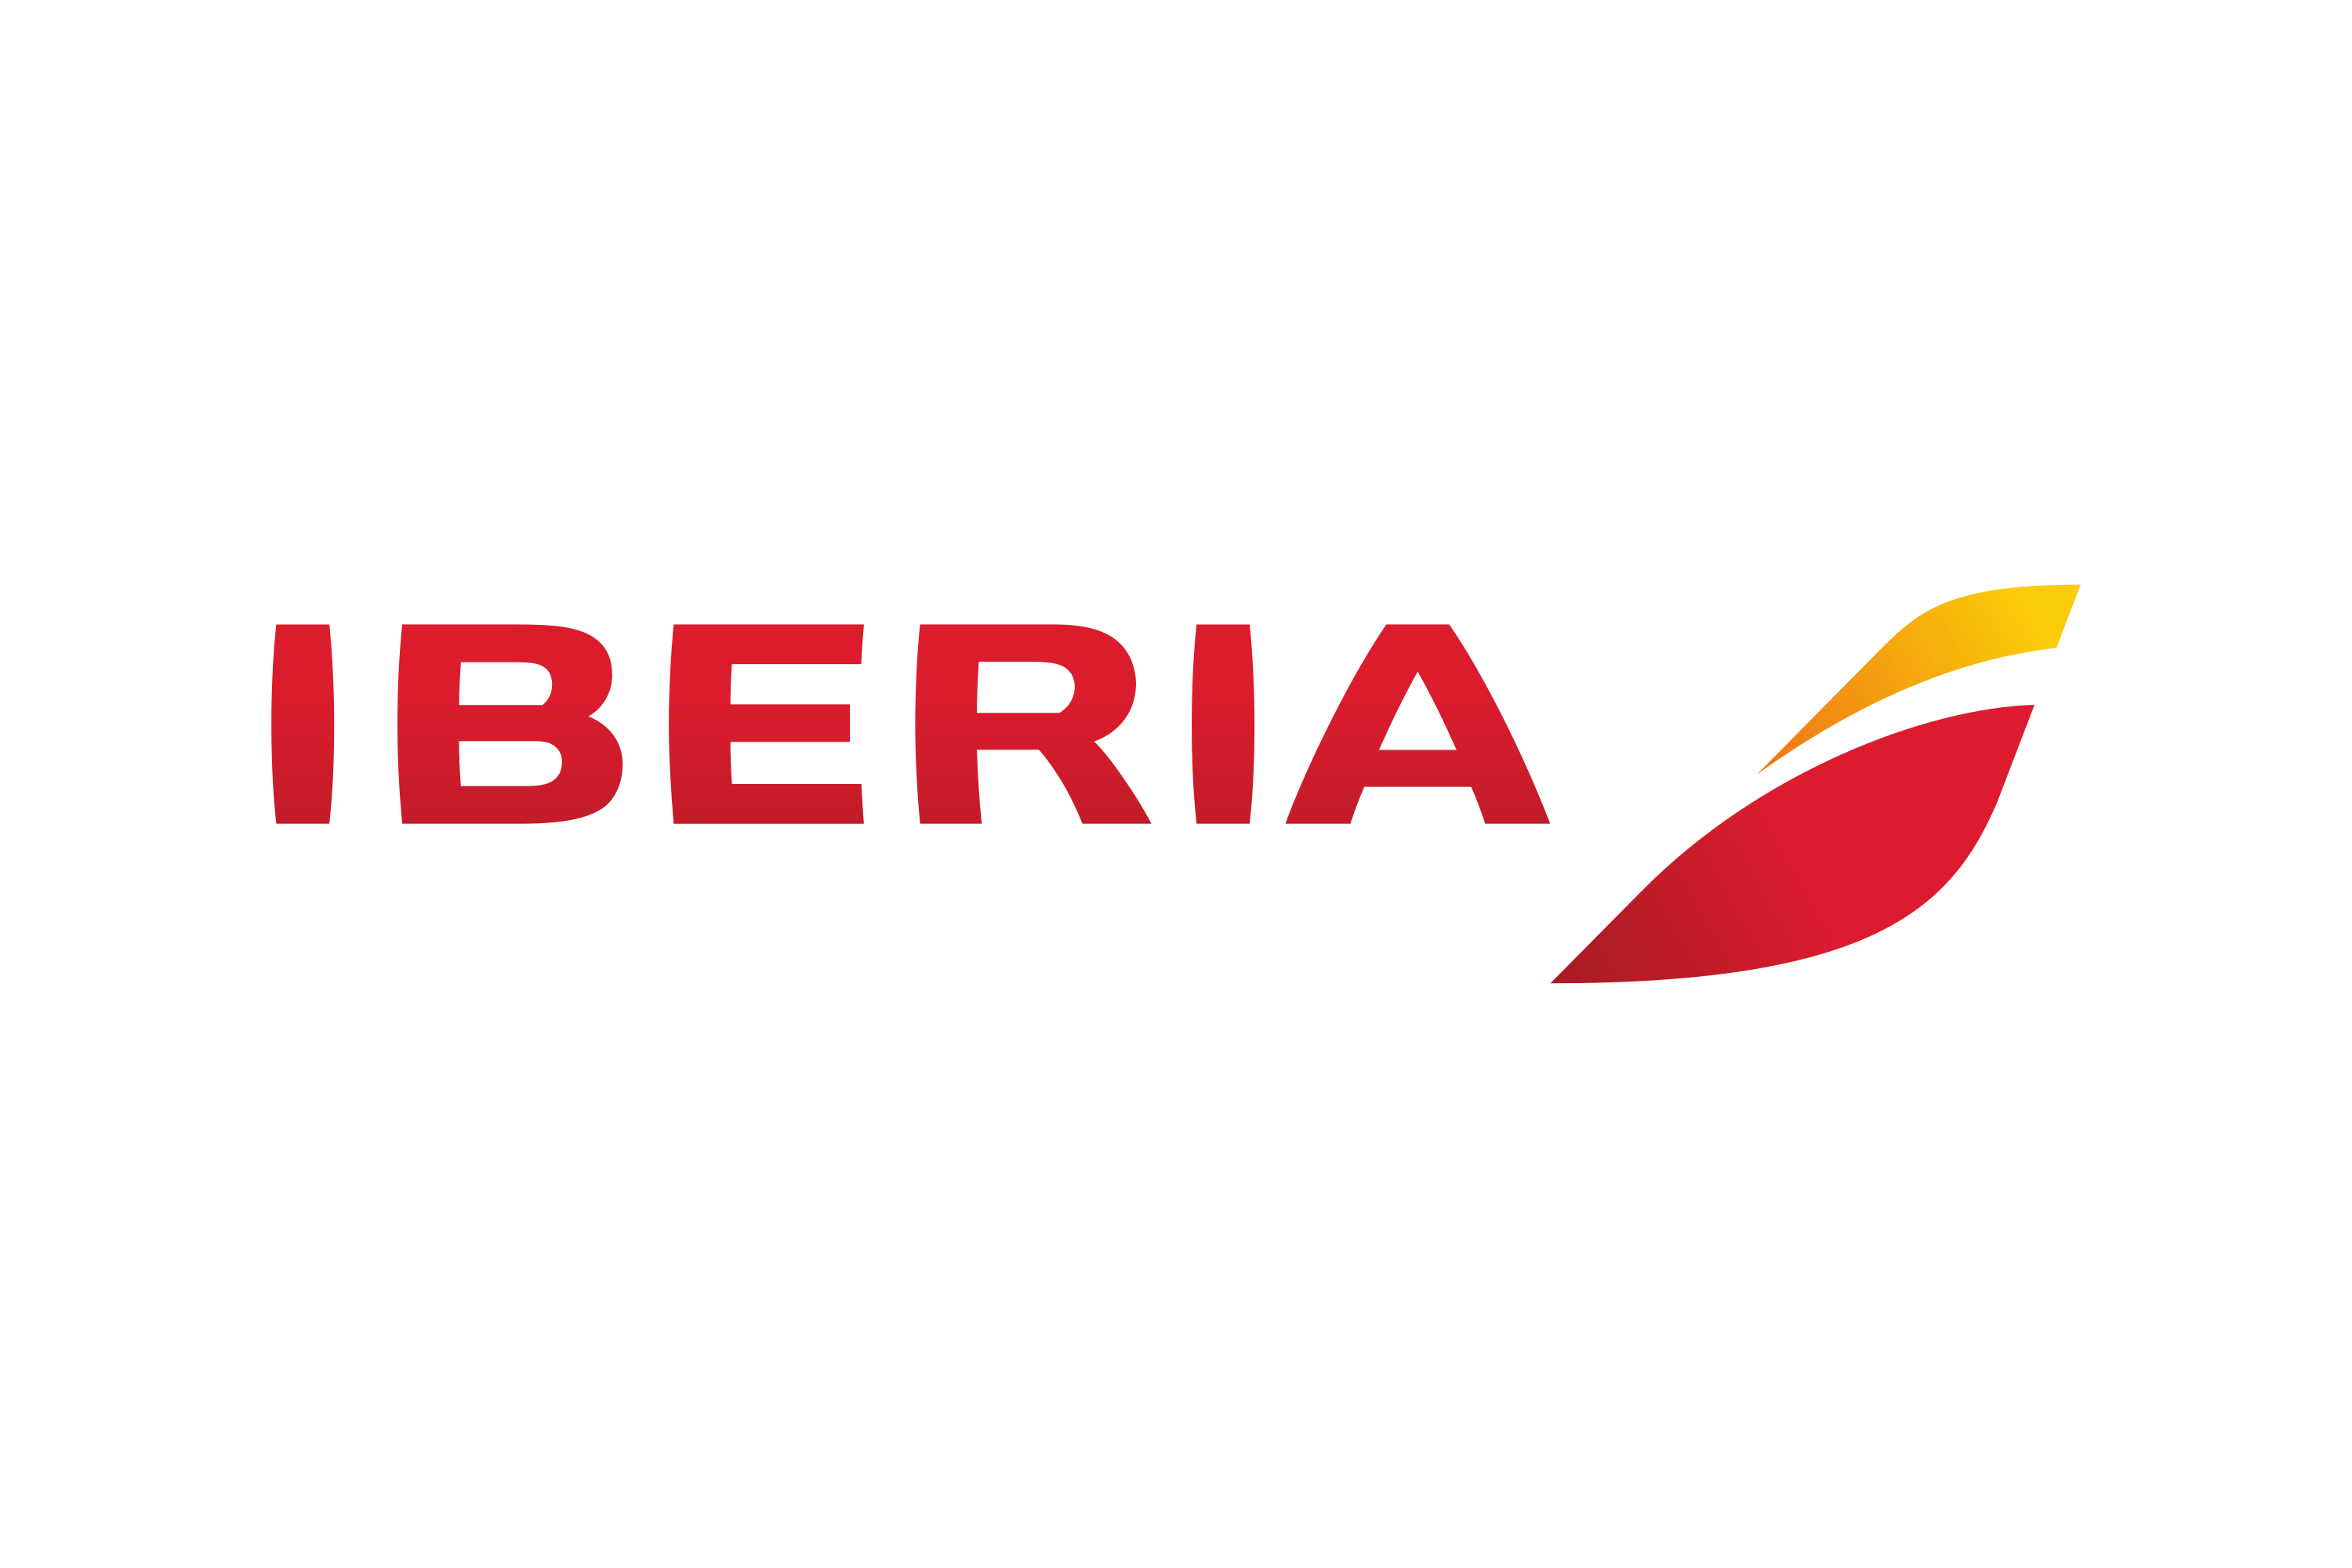 Download Iberia Logo in SVG Vector or PNG File Format - Logo.wine